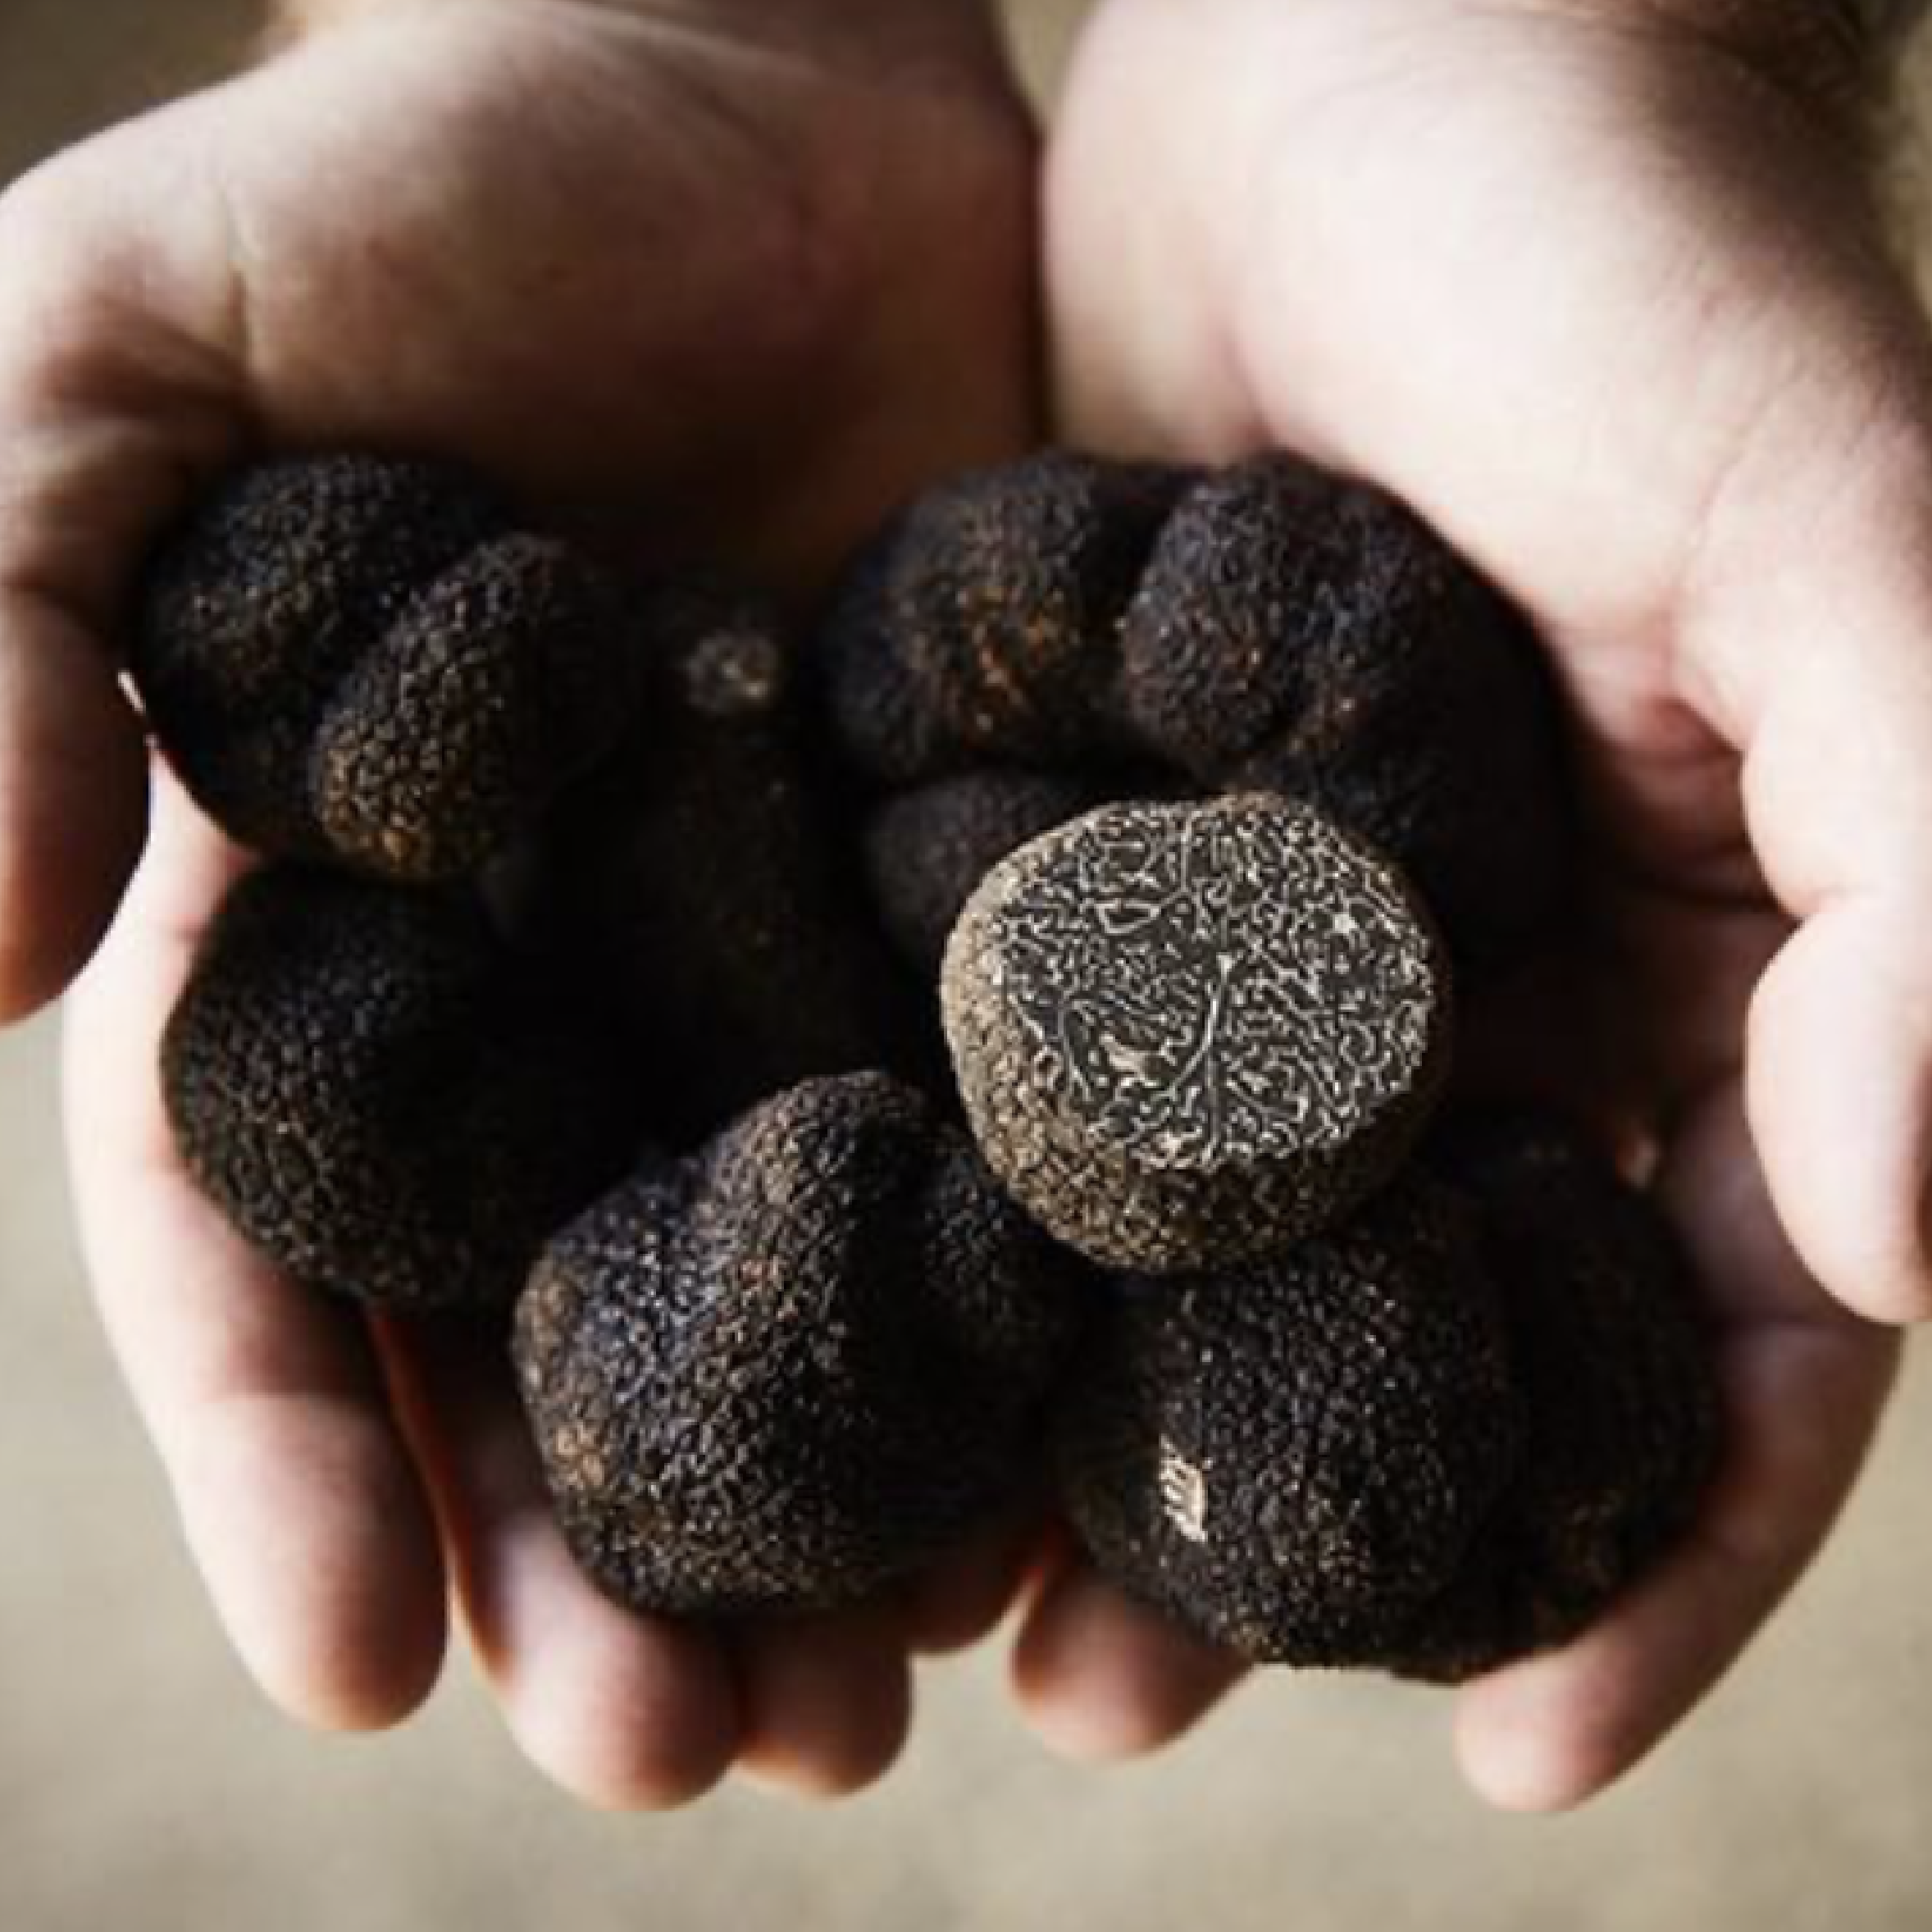 Black winter truffles (fresh)